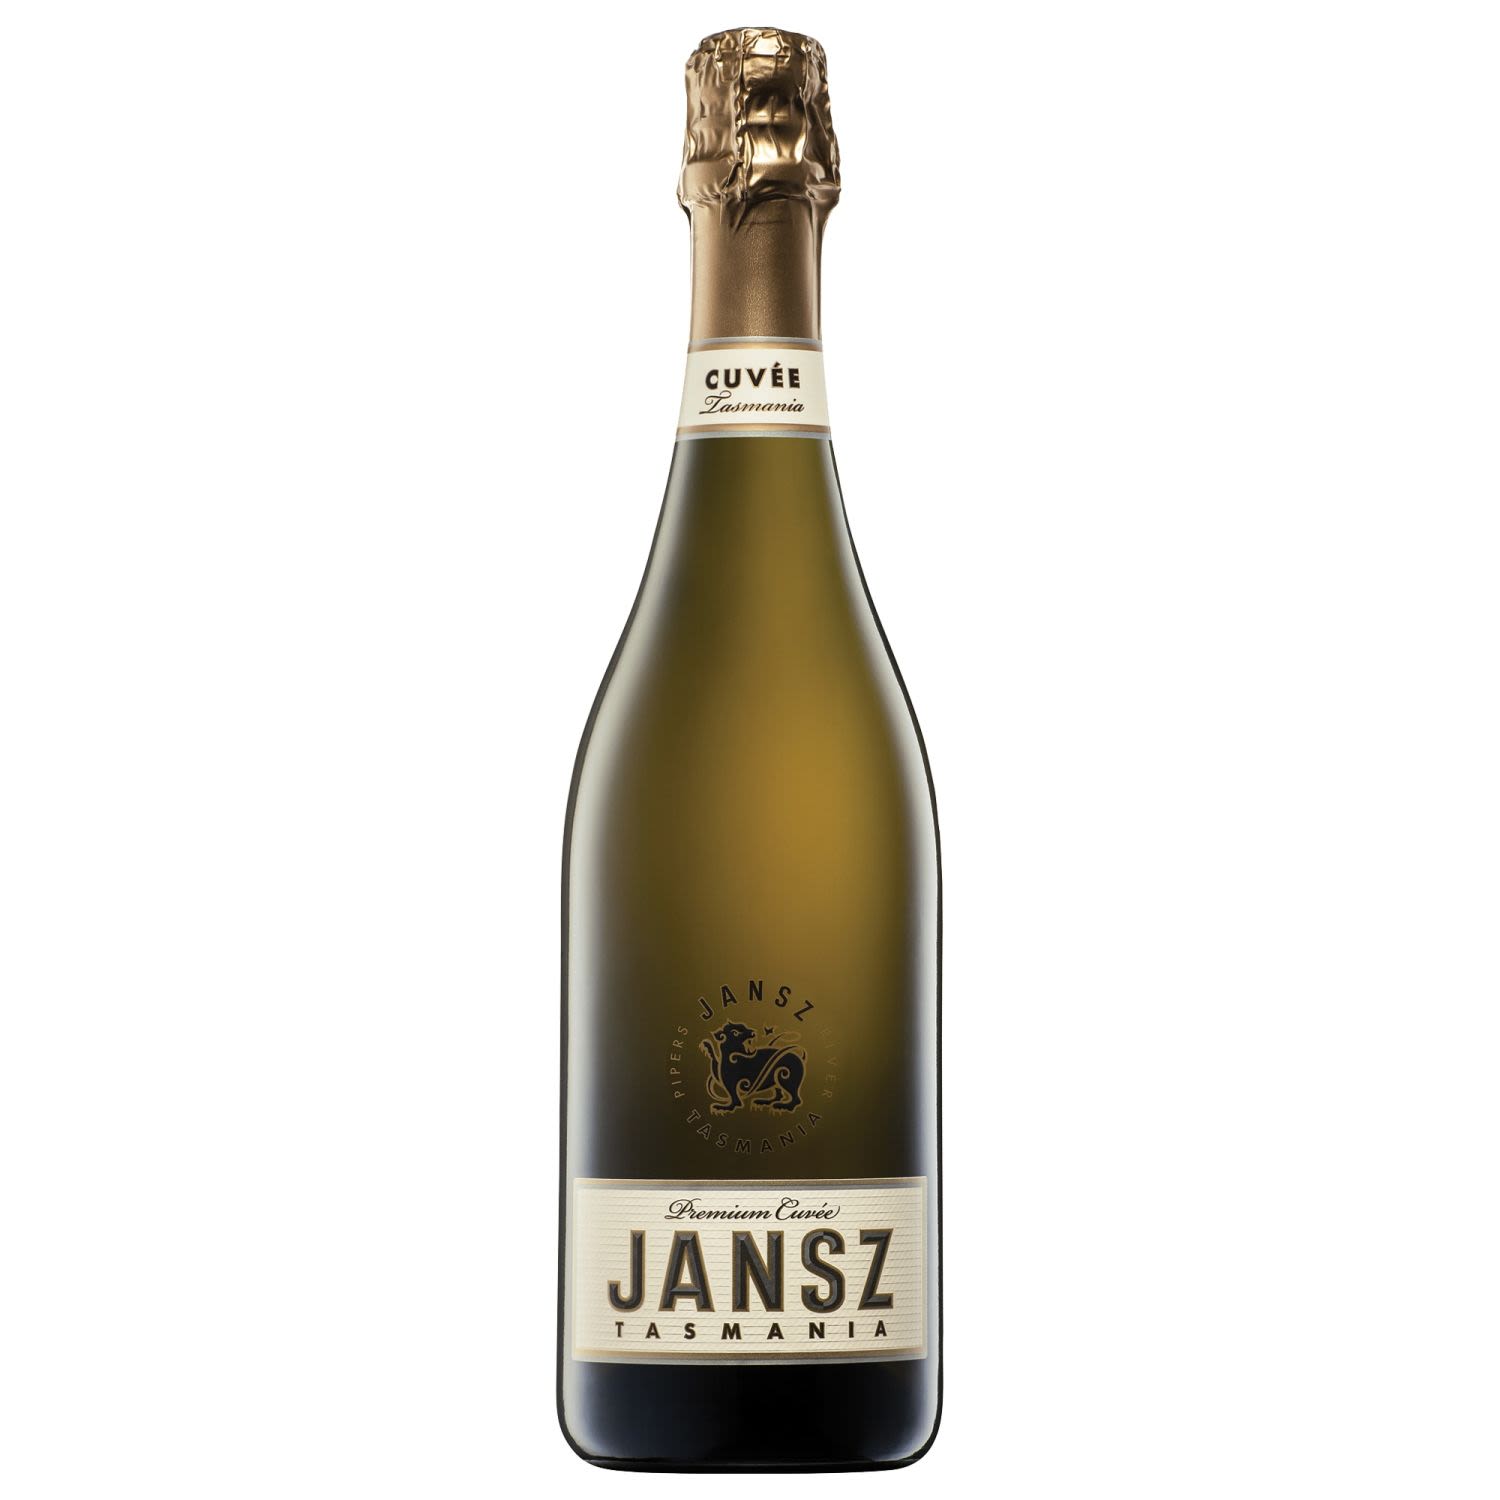 Jansz Tasmania Premium Cuvee NV 750mL Bottle